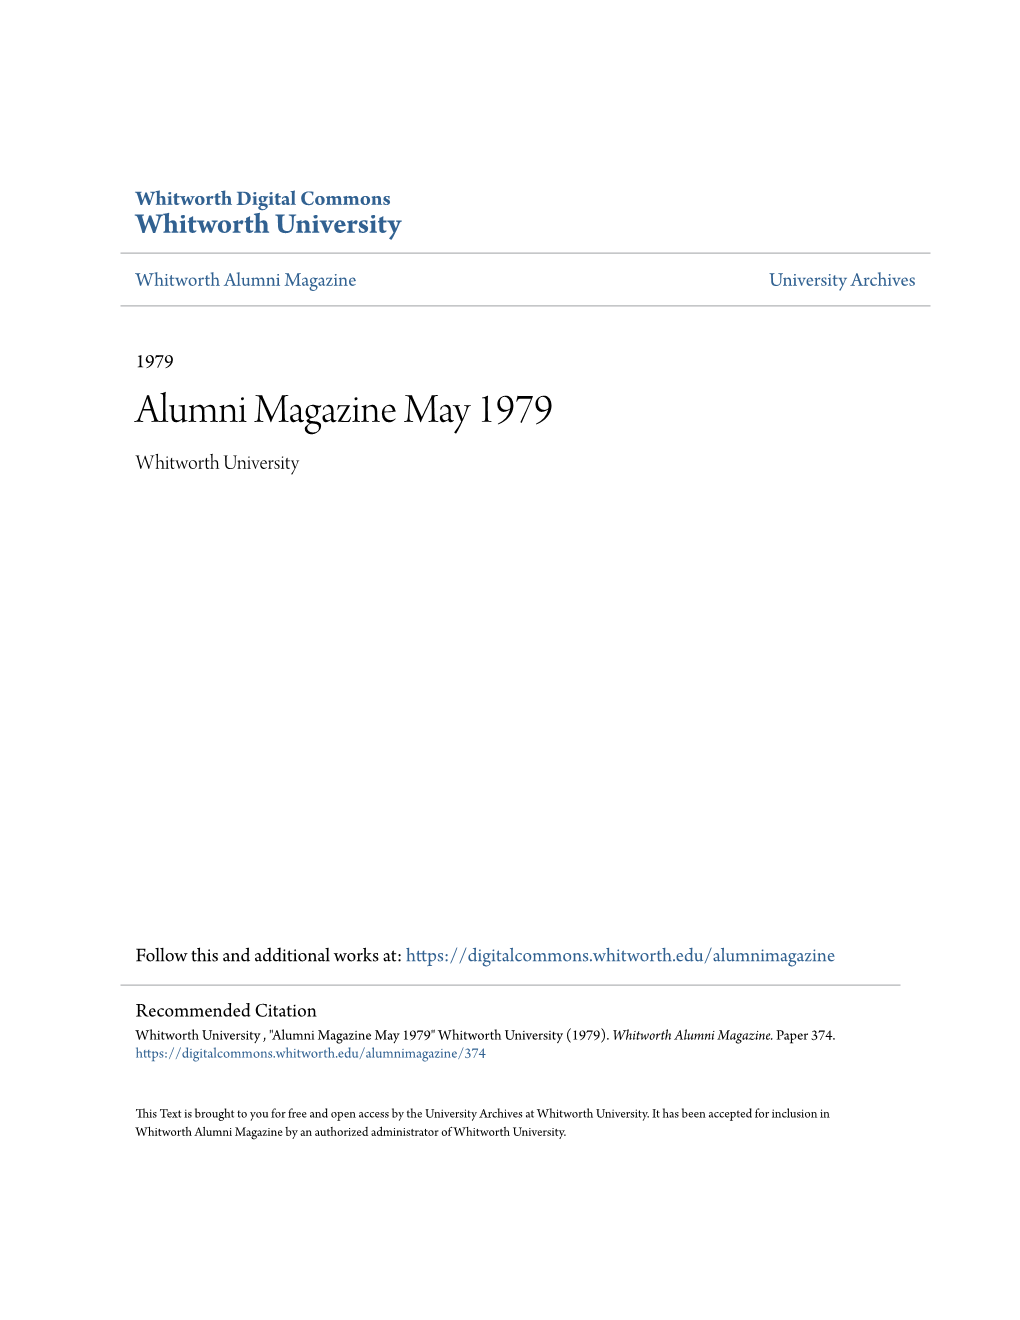 Alumni Magazine May 1979 Whitworth University